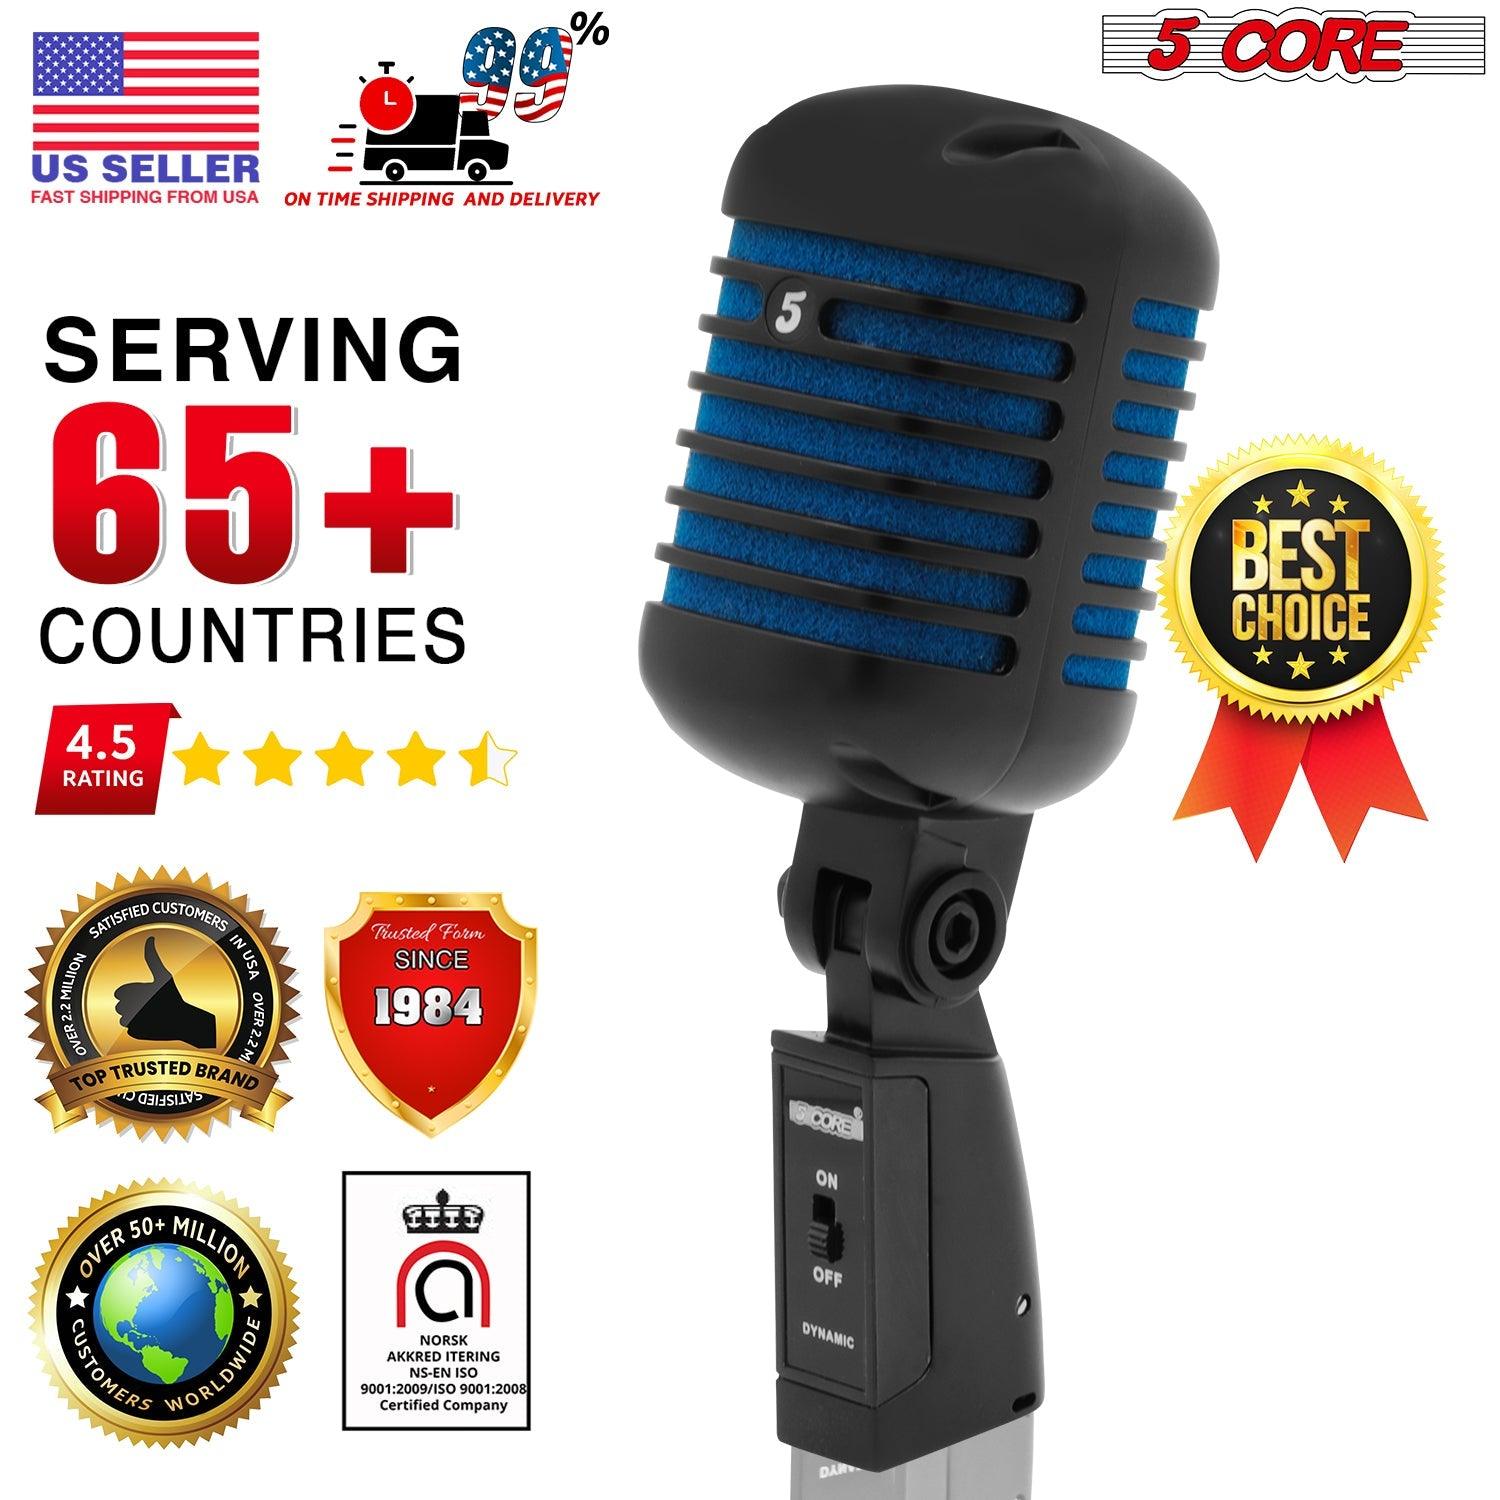 5 Core Classic Retro Dynamic Vocal Microphone RTRO MIC CH BLK-BLU - VirtuousWares:Global